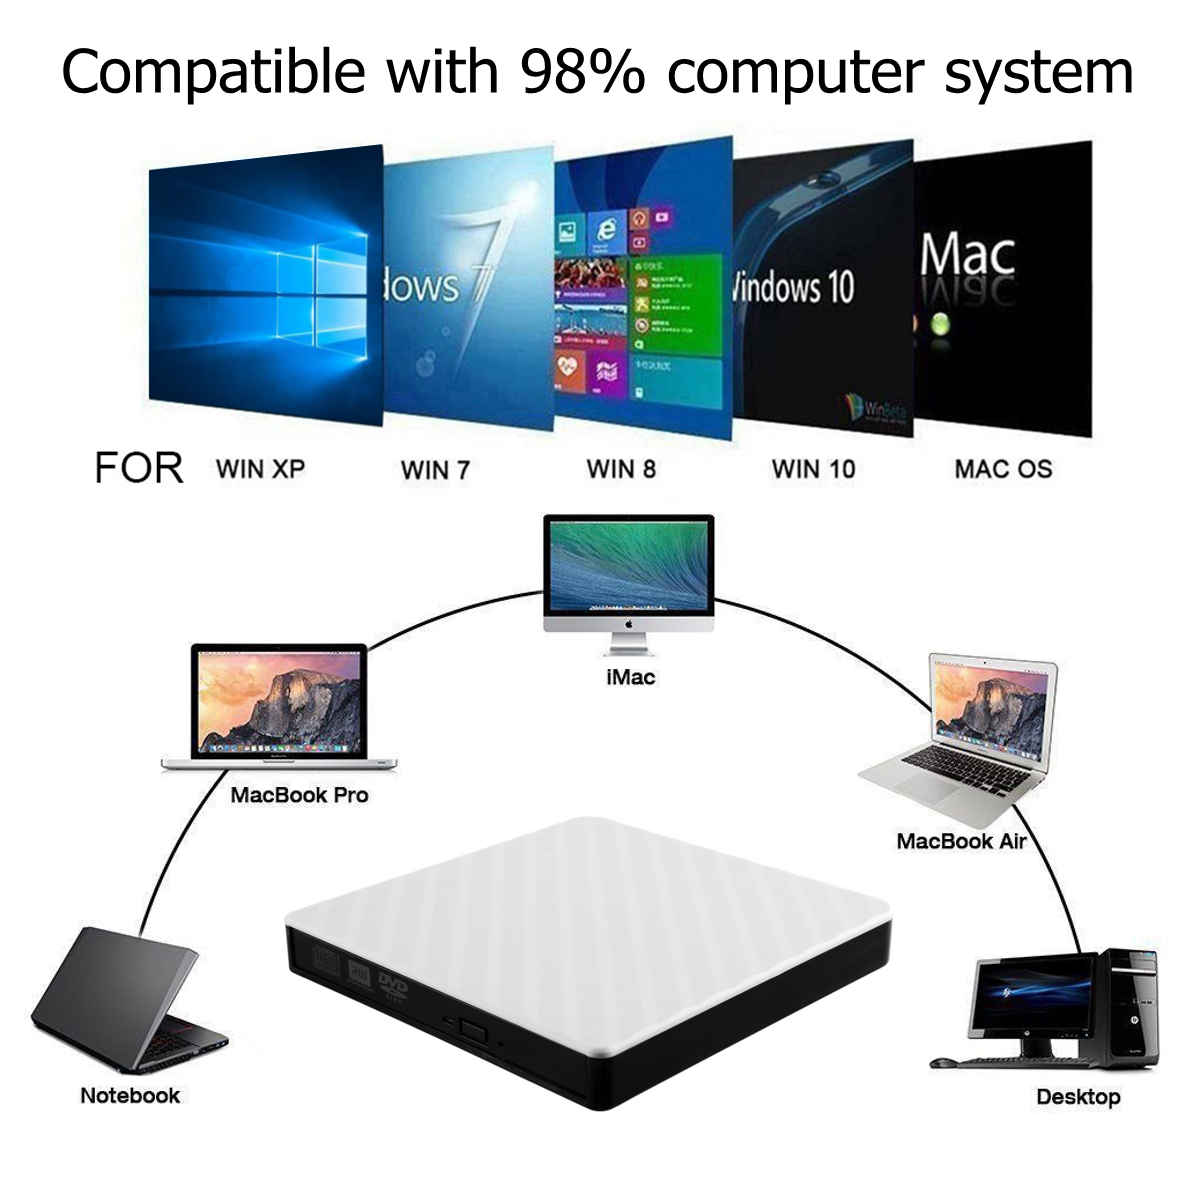 External-USB-30-DVD-RW-CD-Writer-Slim-Carbon-Grain-Drive-Burner-Reader-Player-For-PC-Laptop-Optical--1536013-8